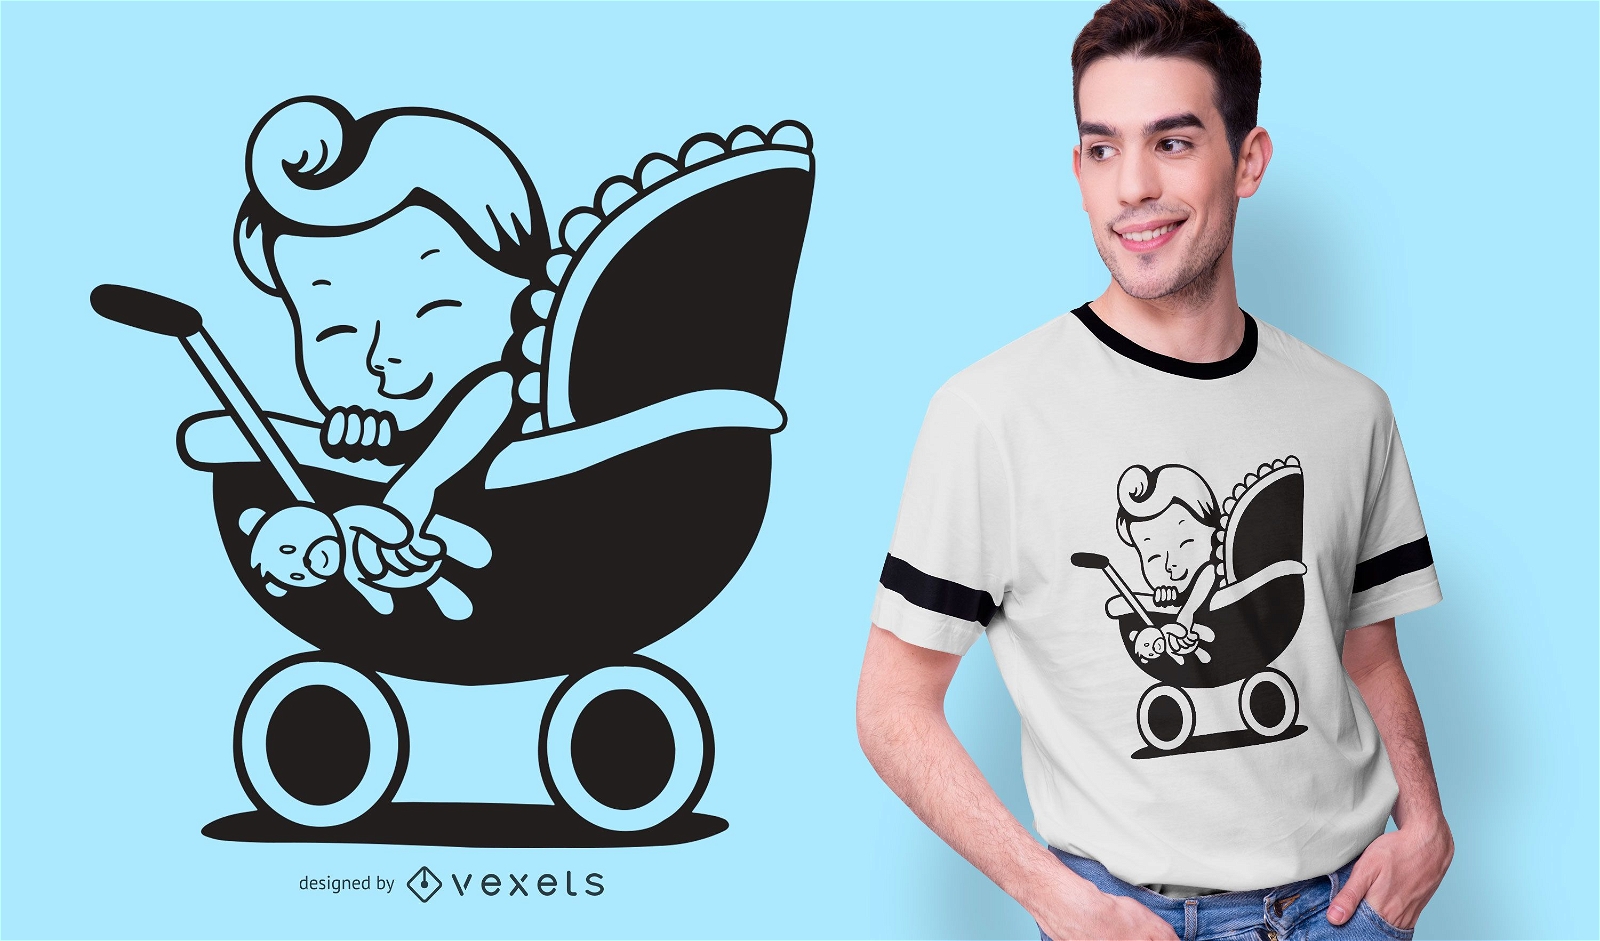 Design bacana de camisetas para beb?s